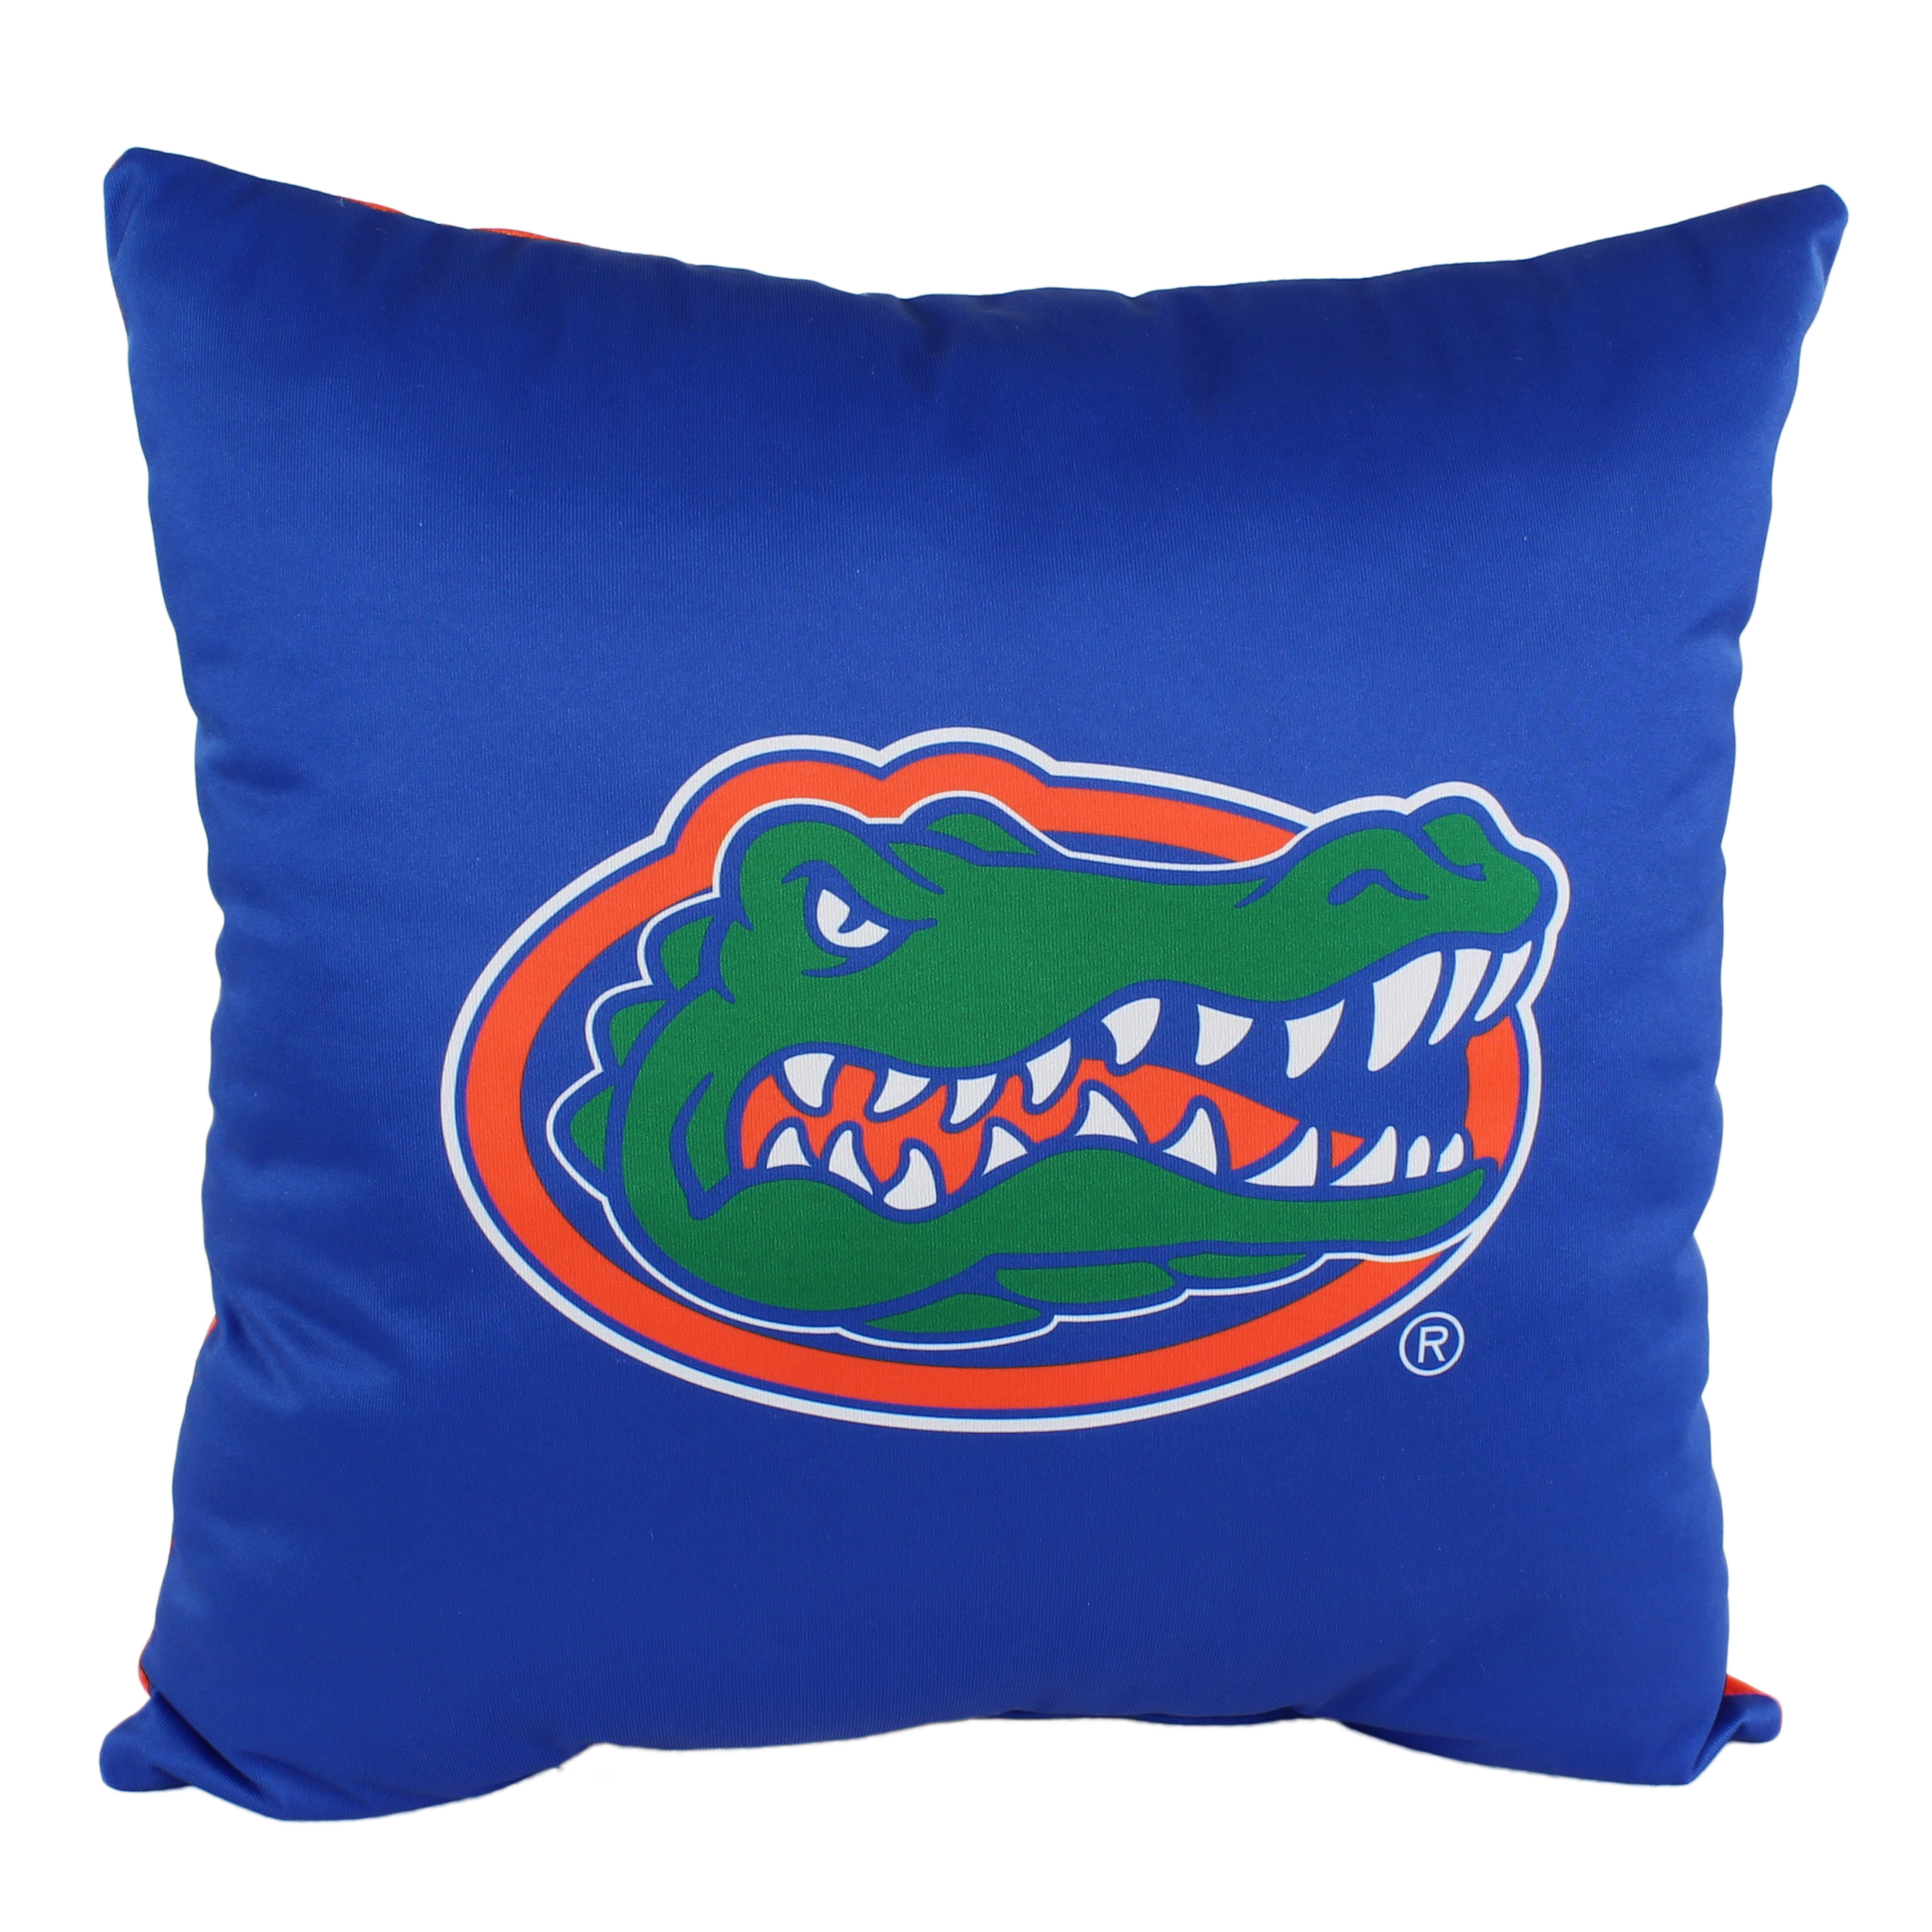 Florida Gators 16 inch Reversible Decorative Pillow - image 1 of 4